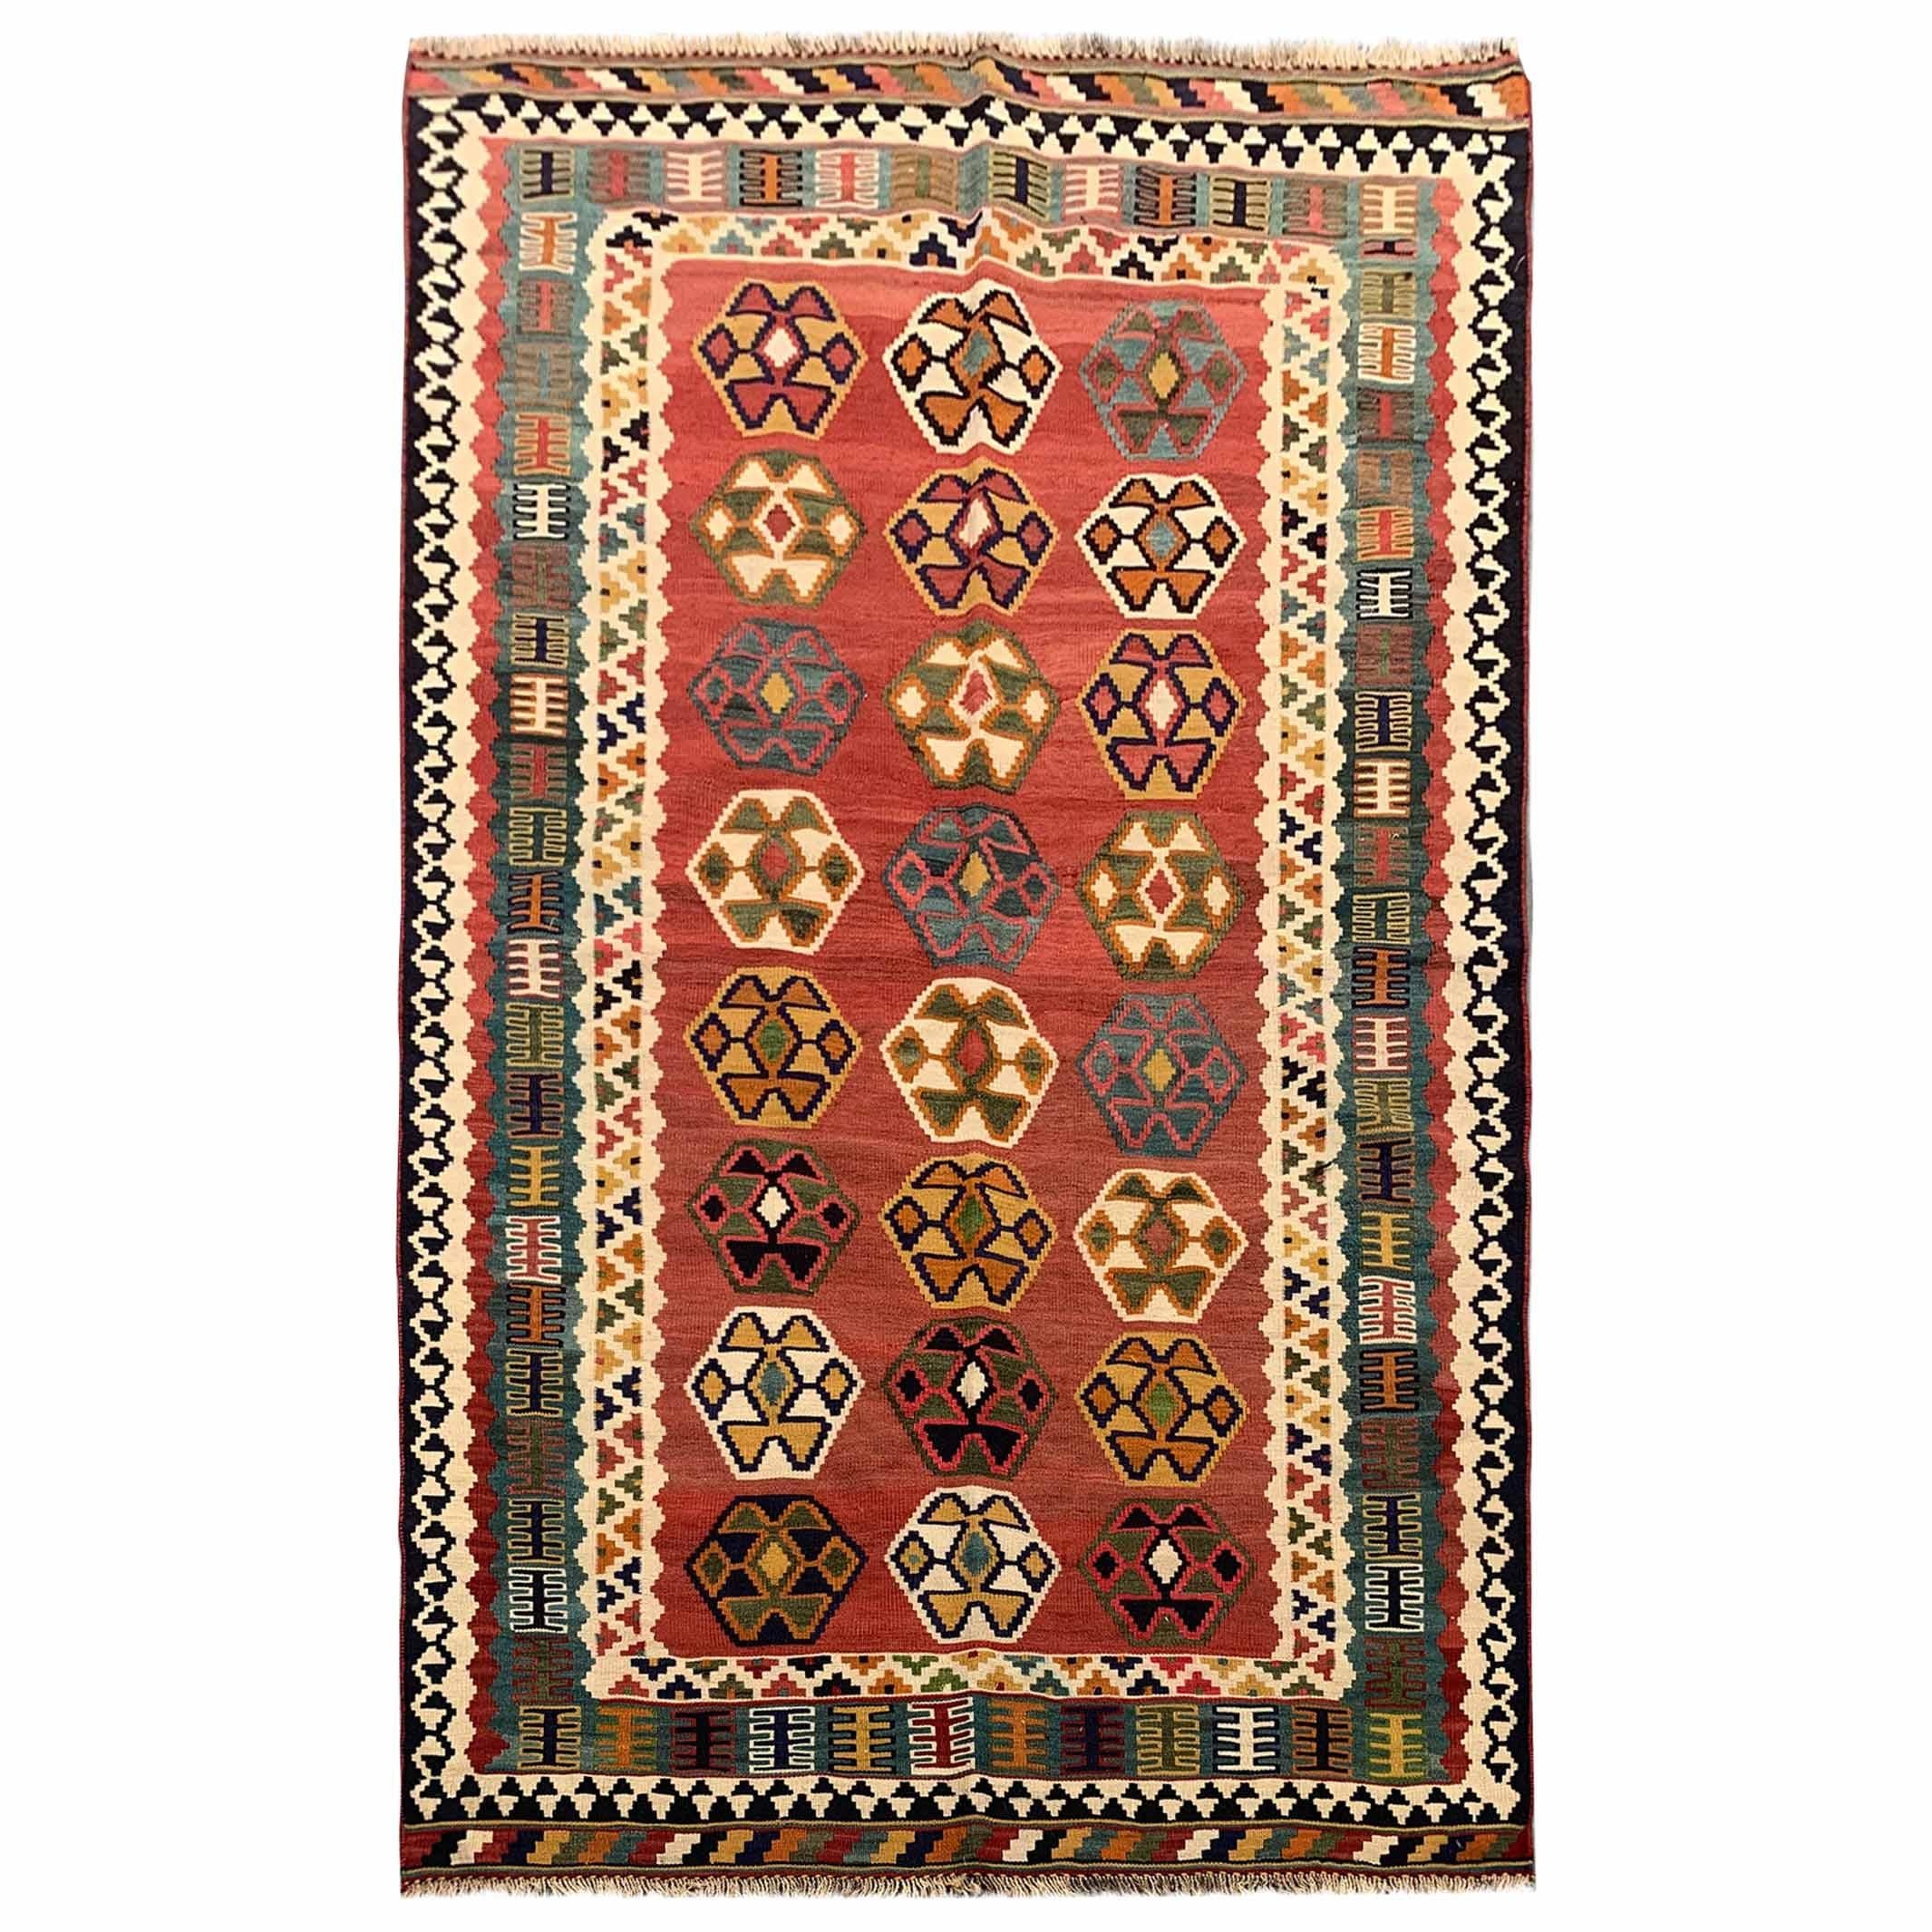 Antique Kilim Rugs for Sale Caucasian Kilims Carpet 